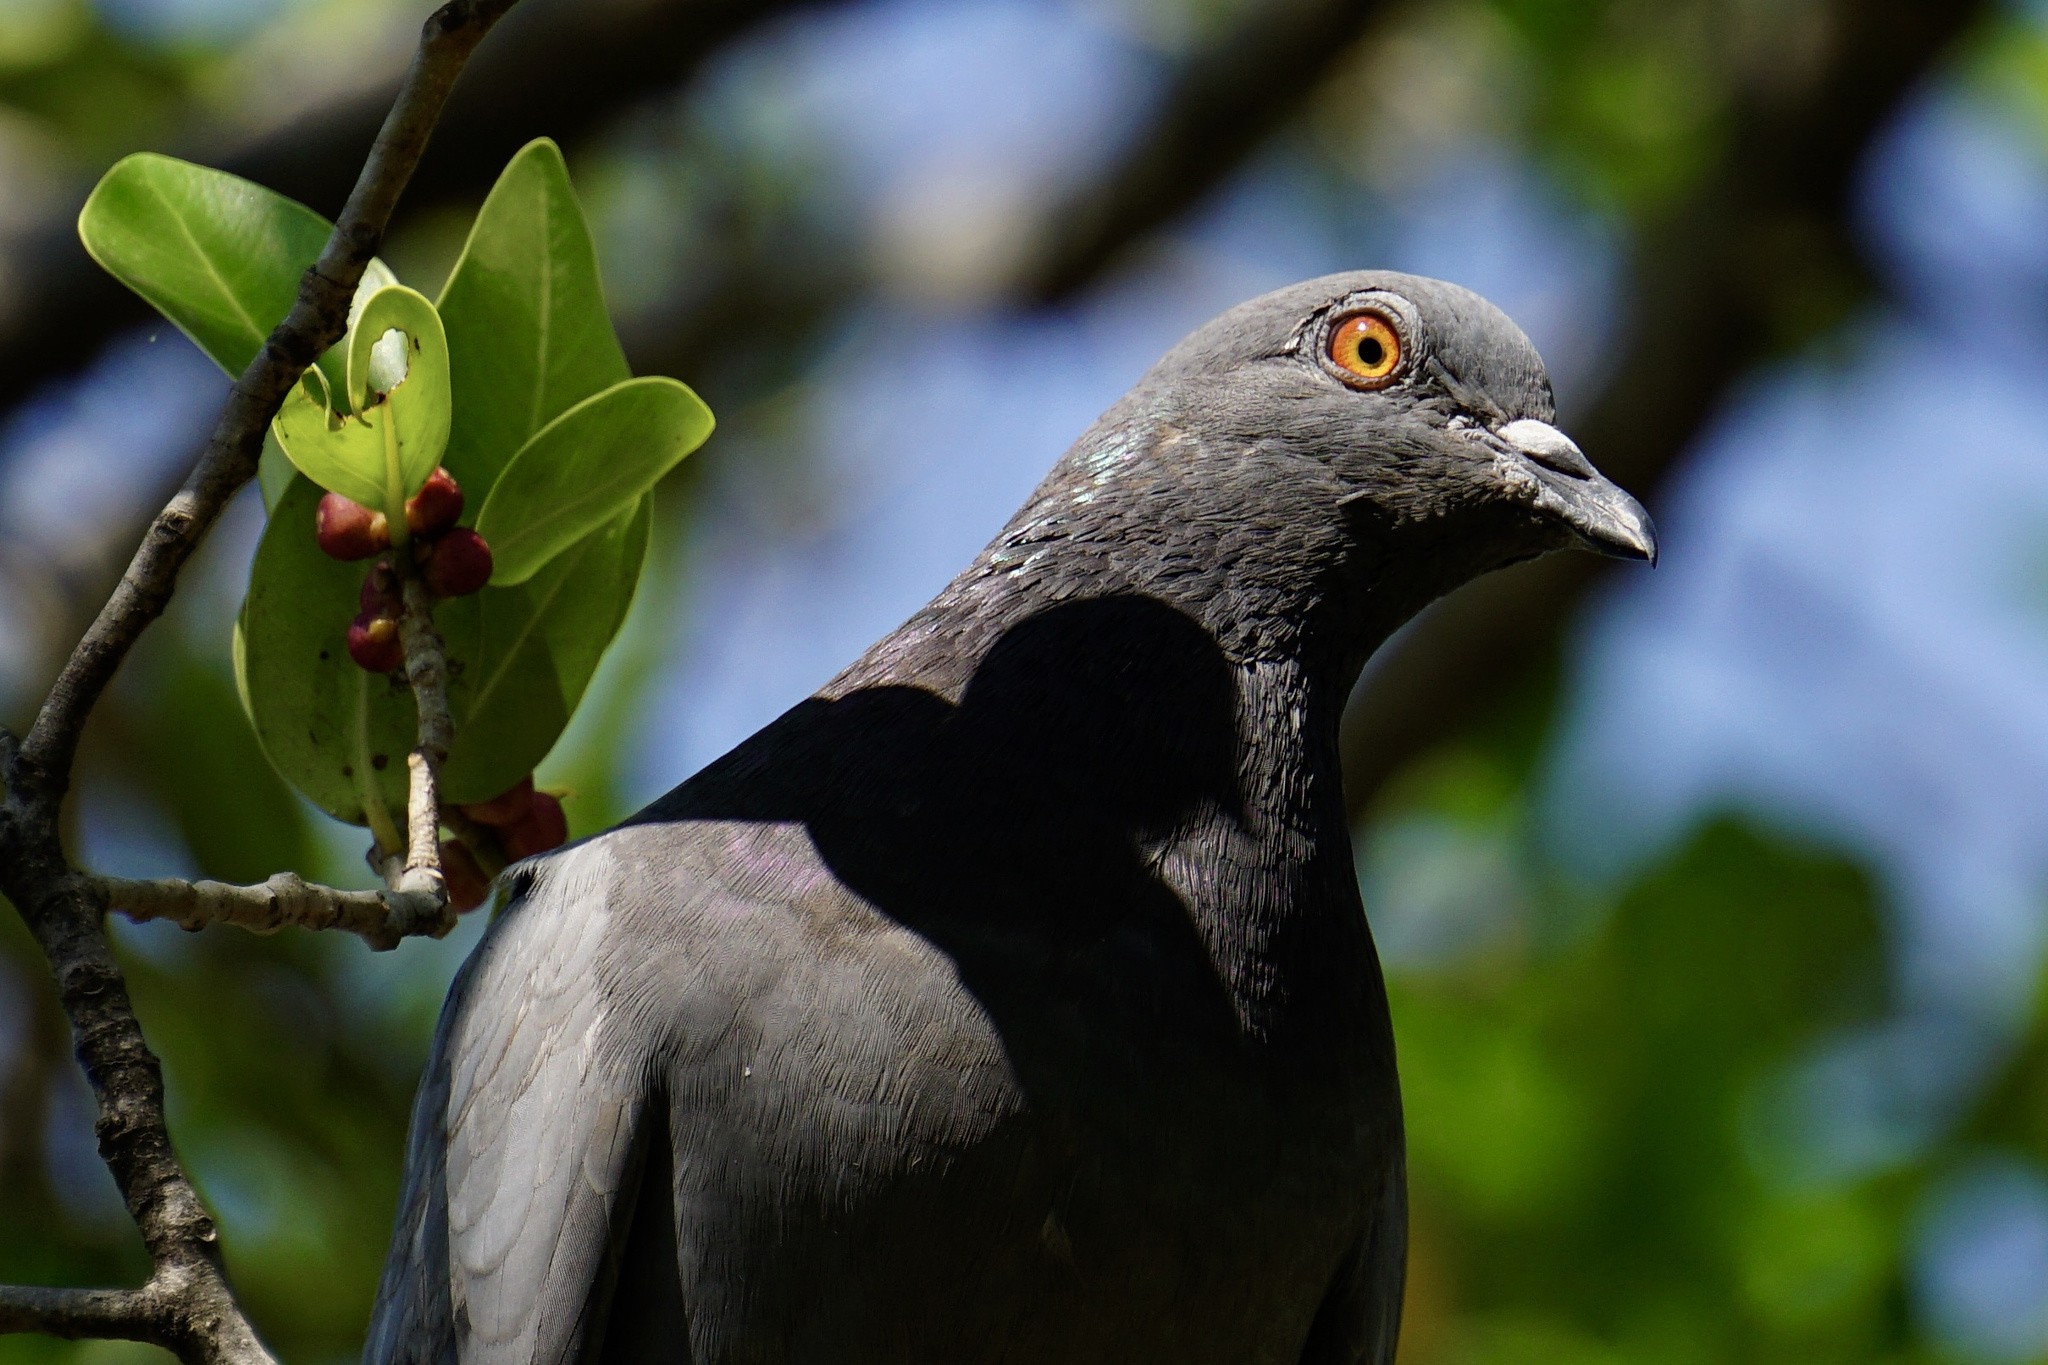 General 2048x1365 animals birds plants closeup pigeons leaves blurred blurry background beak